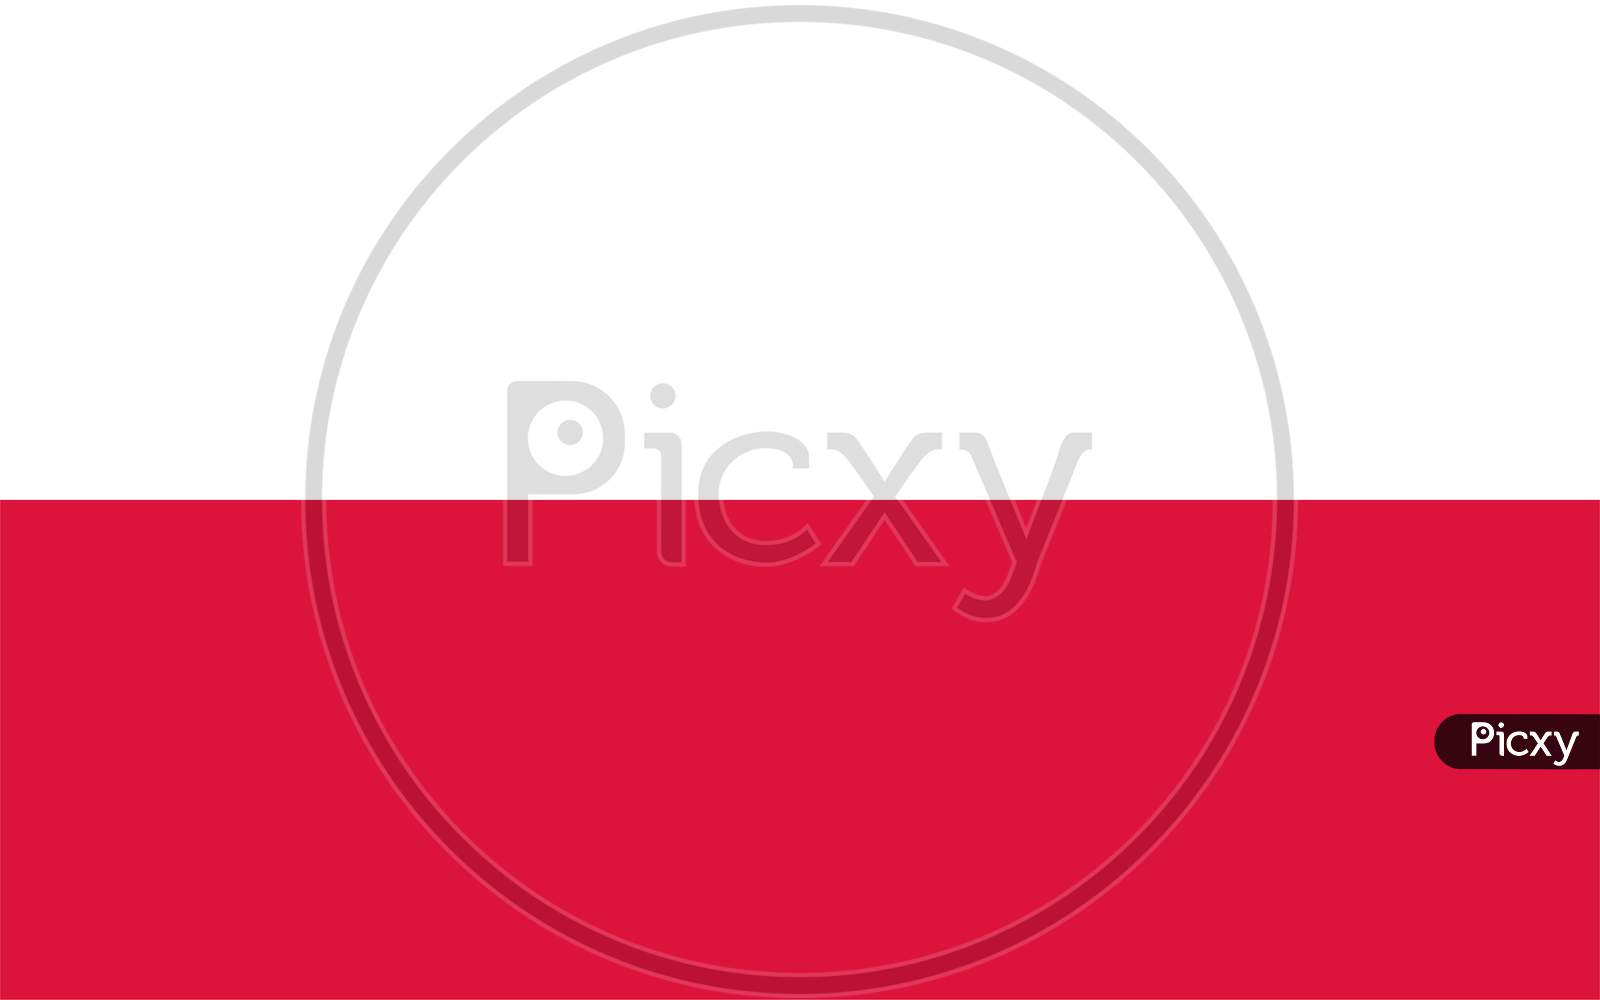 Polish Flag Of Poland